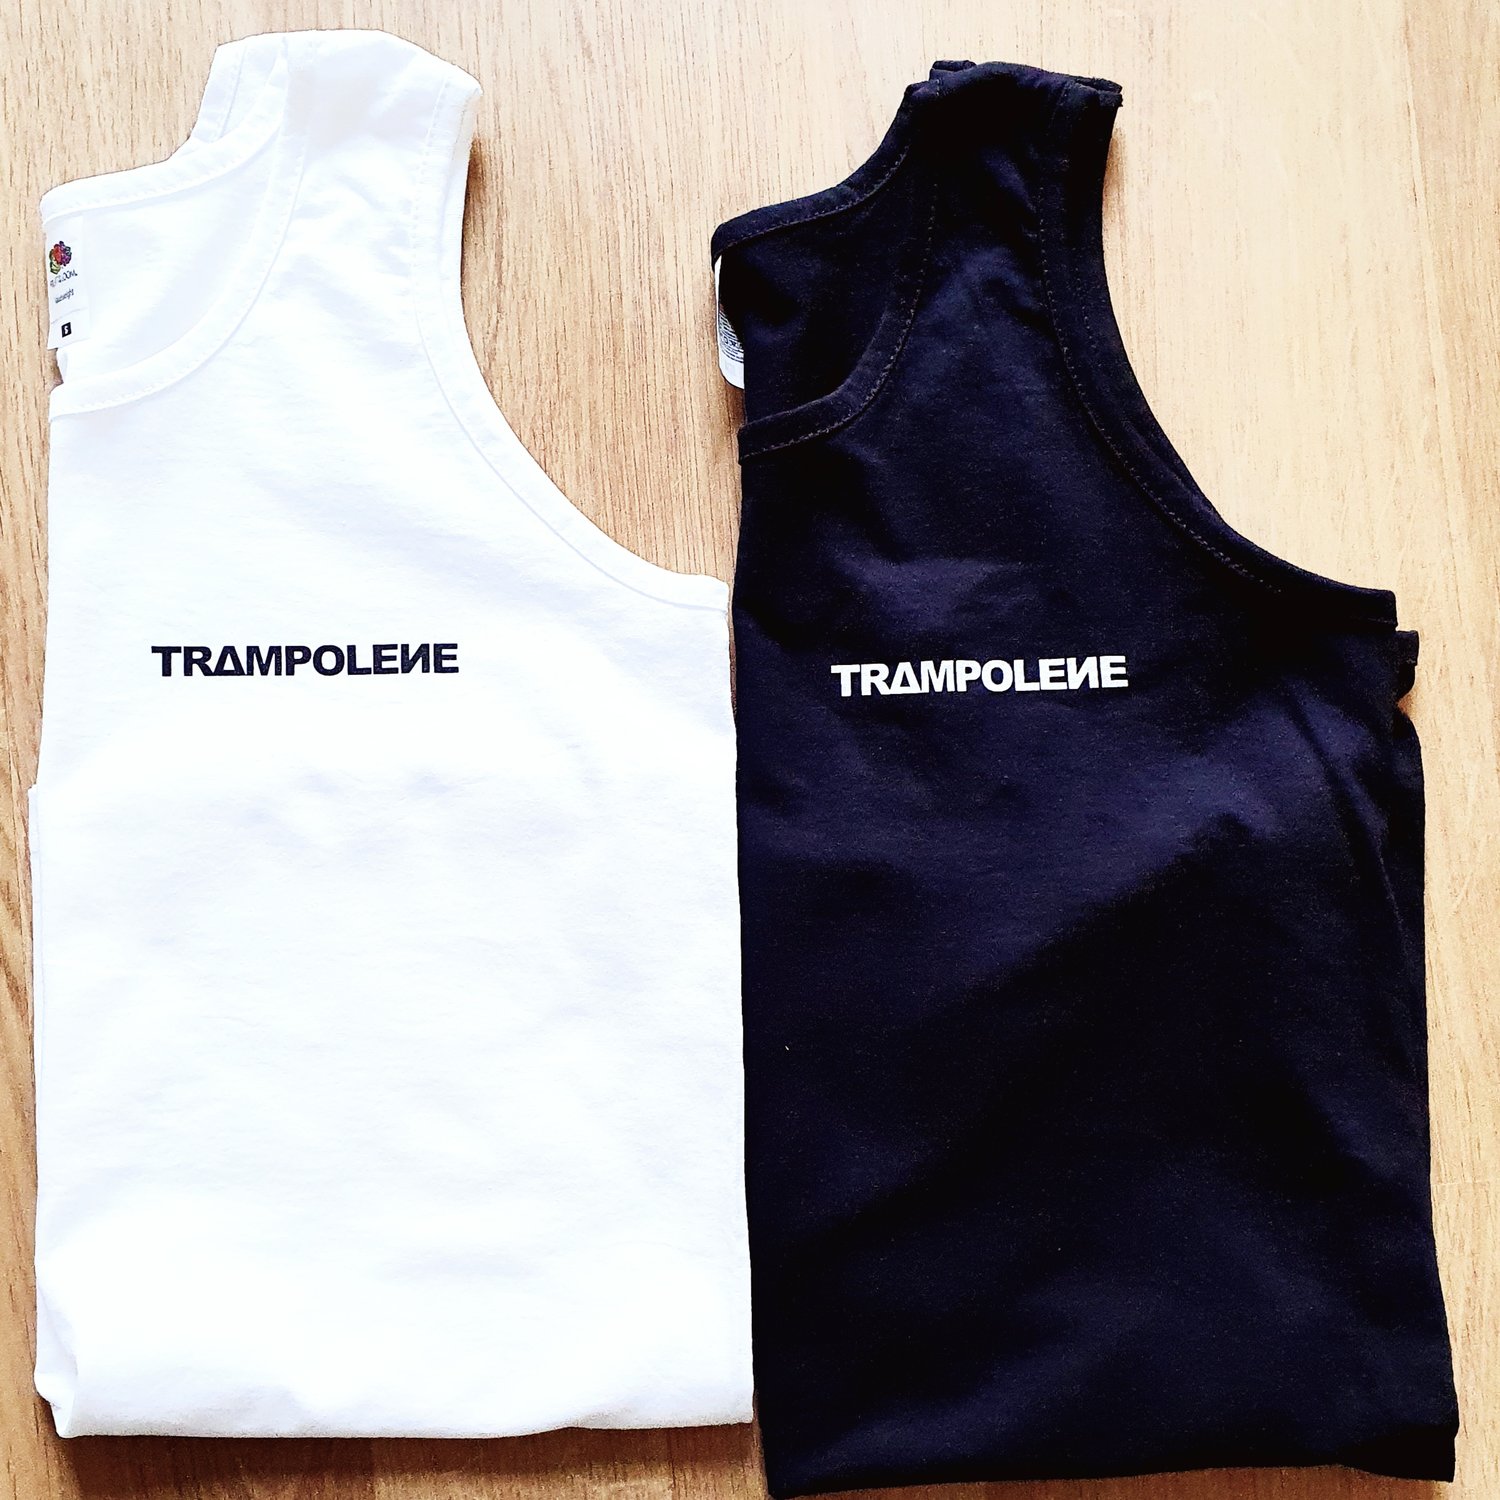 Image of TRAMPOLENE vest in black or white, mens slim fit 'athletic' style